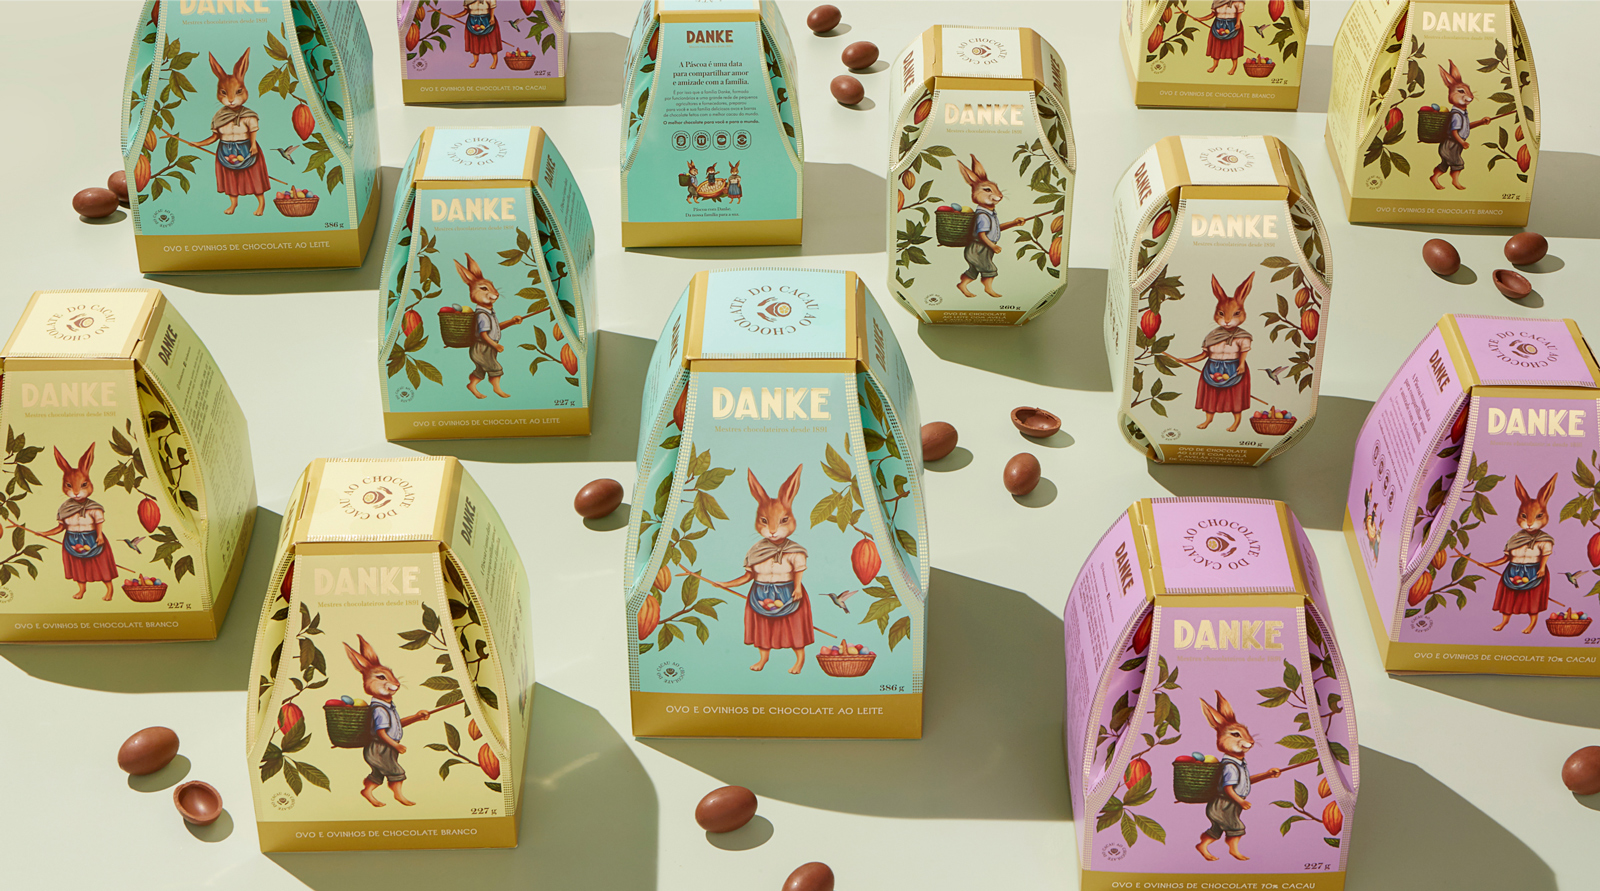 Danke巧克力产品插画风格包装设计欣赏(图8)